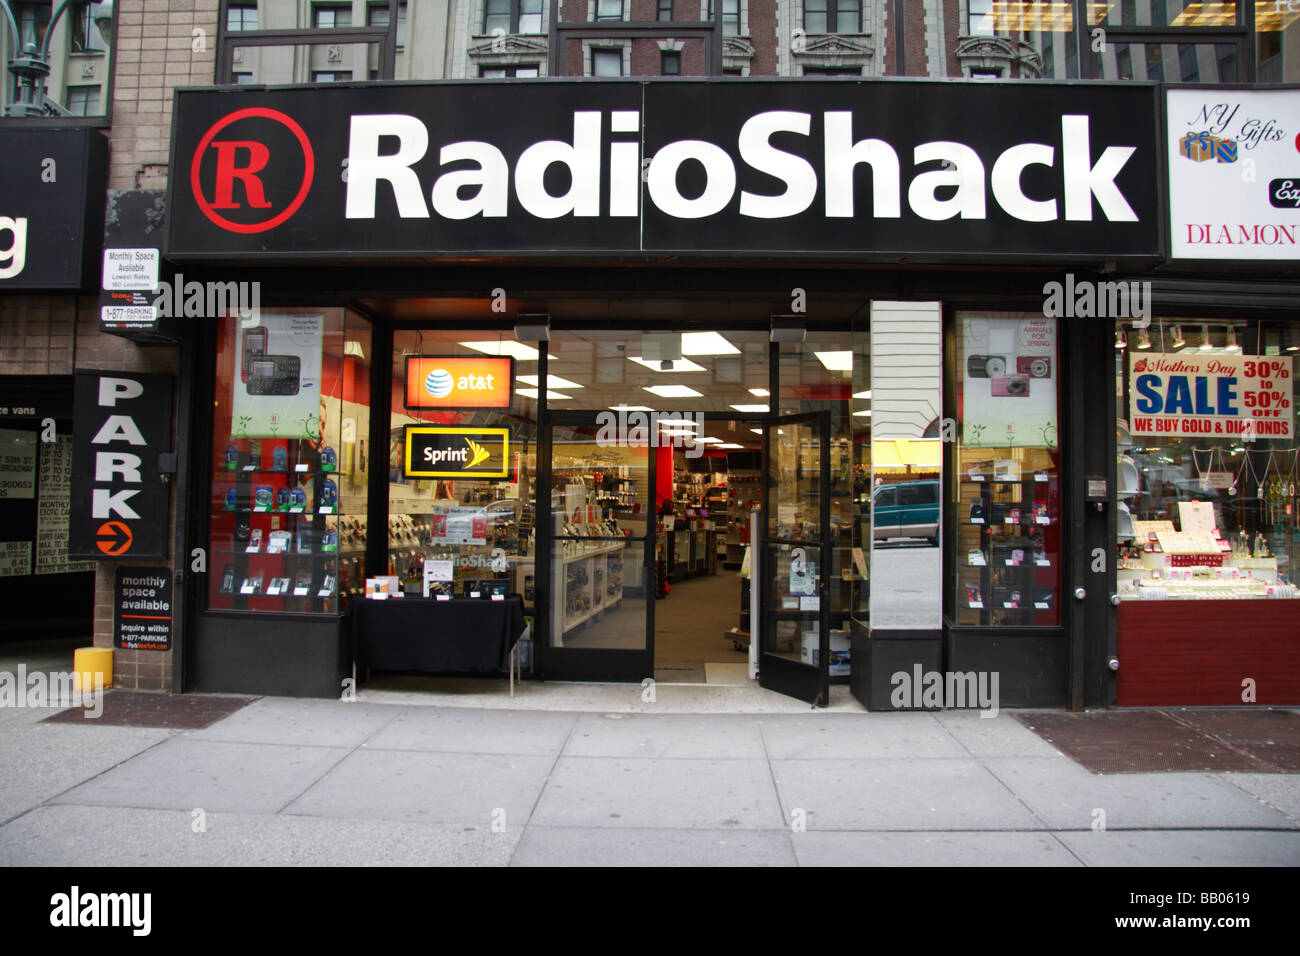 Radioshack manhattan nyc hi-res stock photography and images - Alamy